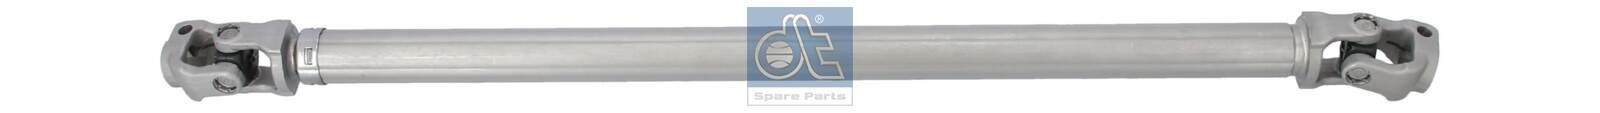 K S00 000 031 DT Spare Parts Electric Power Steering + Steering Column 2.53265 buy